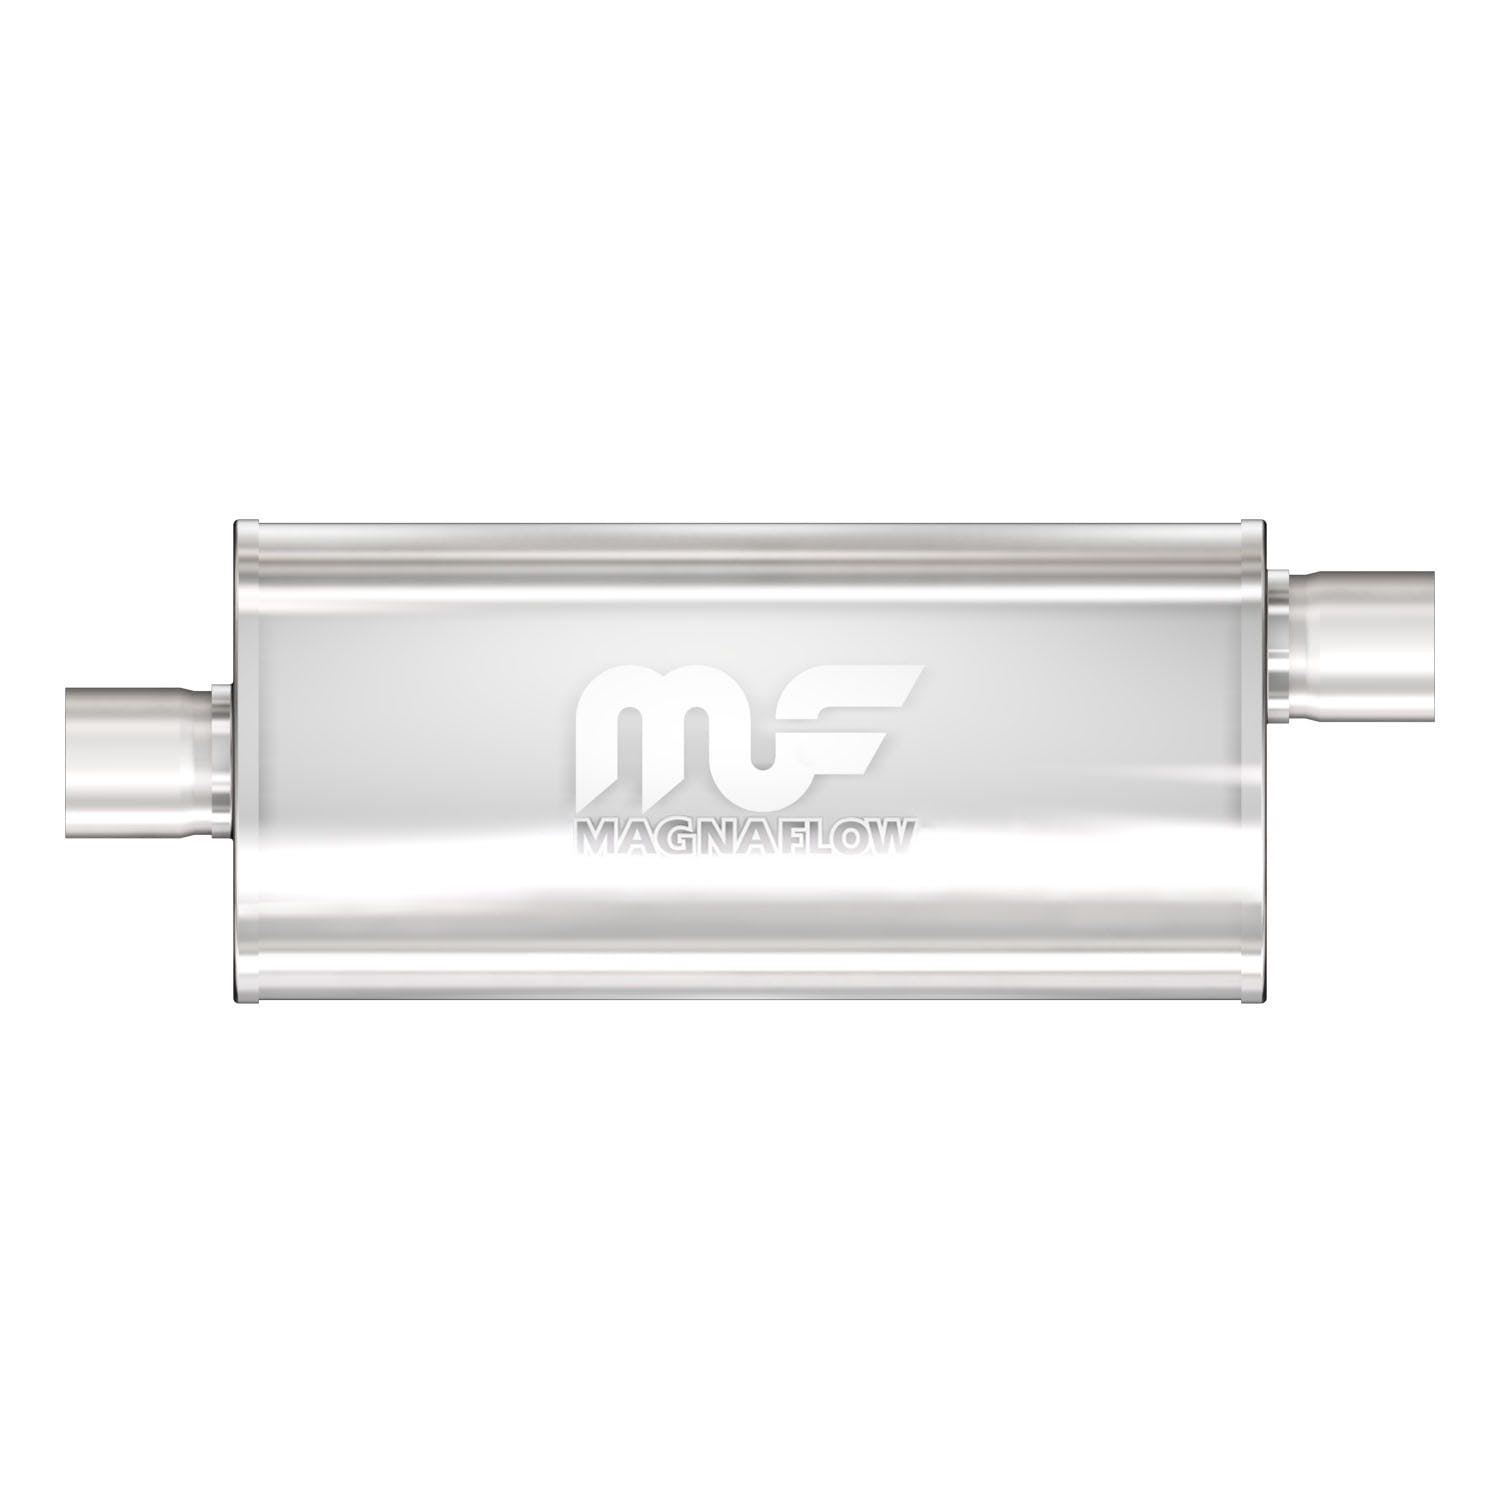 MagnaFlow Exhaust Products 14255 Universal Muffler